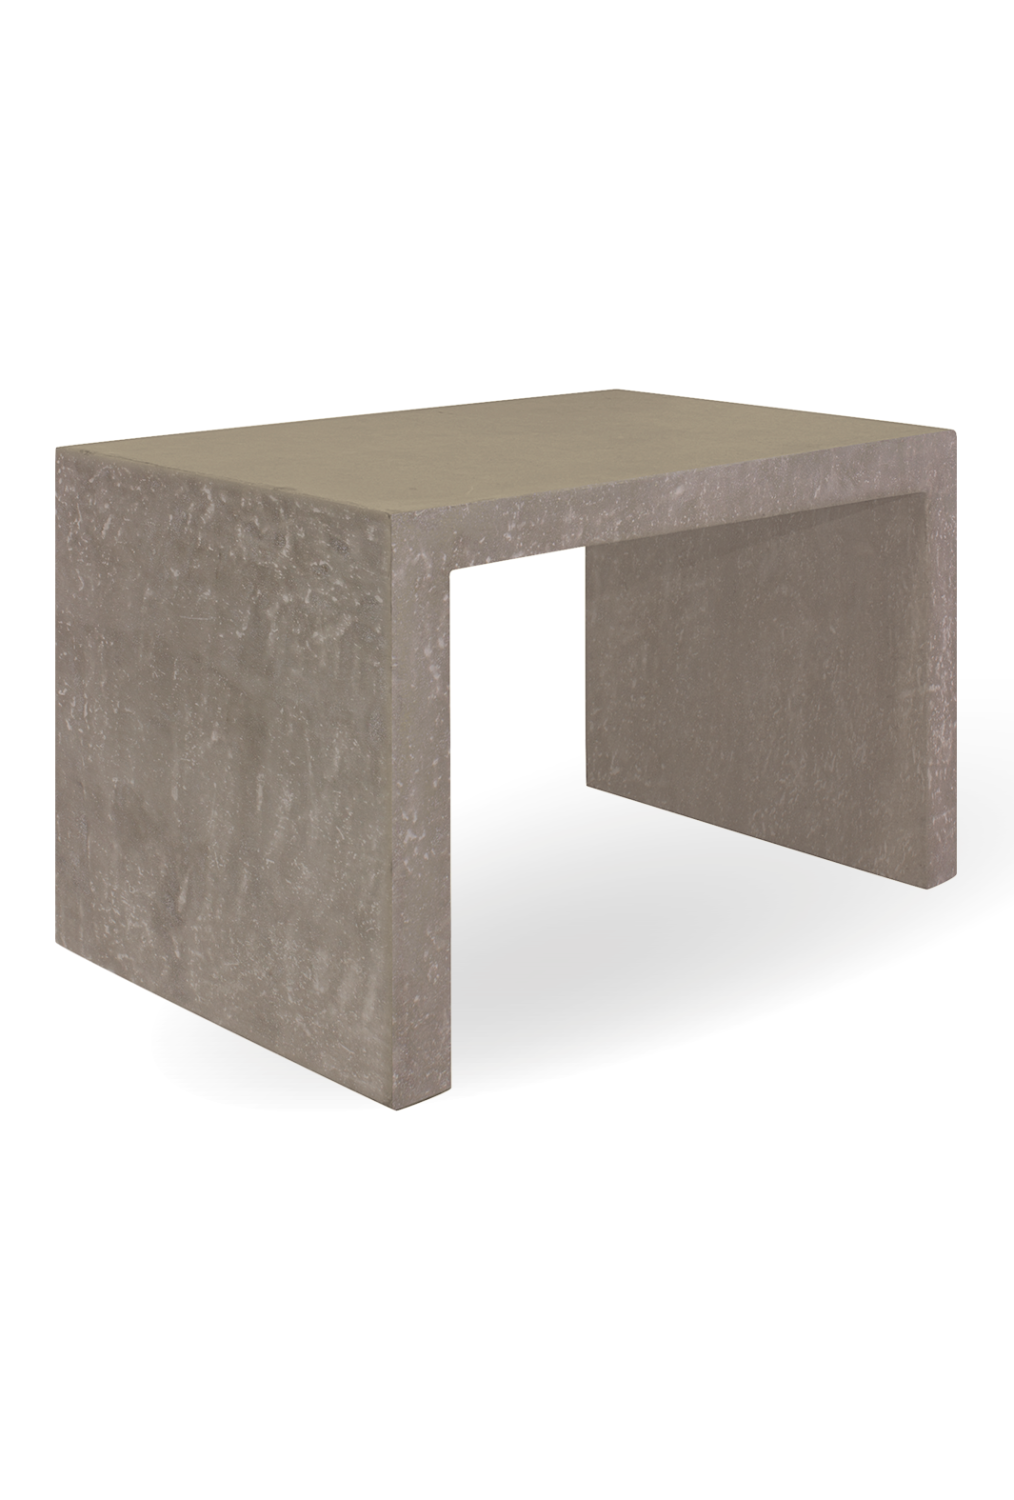 Division Konsole, 81x50/50 cm, natur-beton L: 81 B: 50 H: 50 | natur-beton